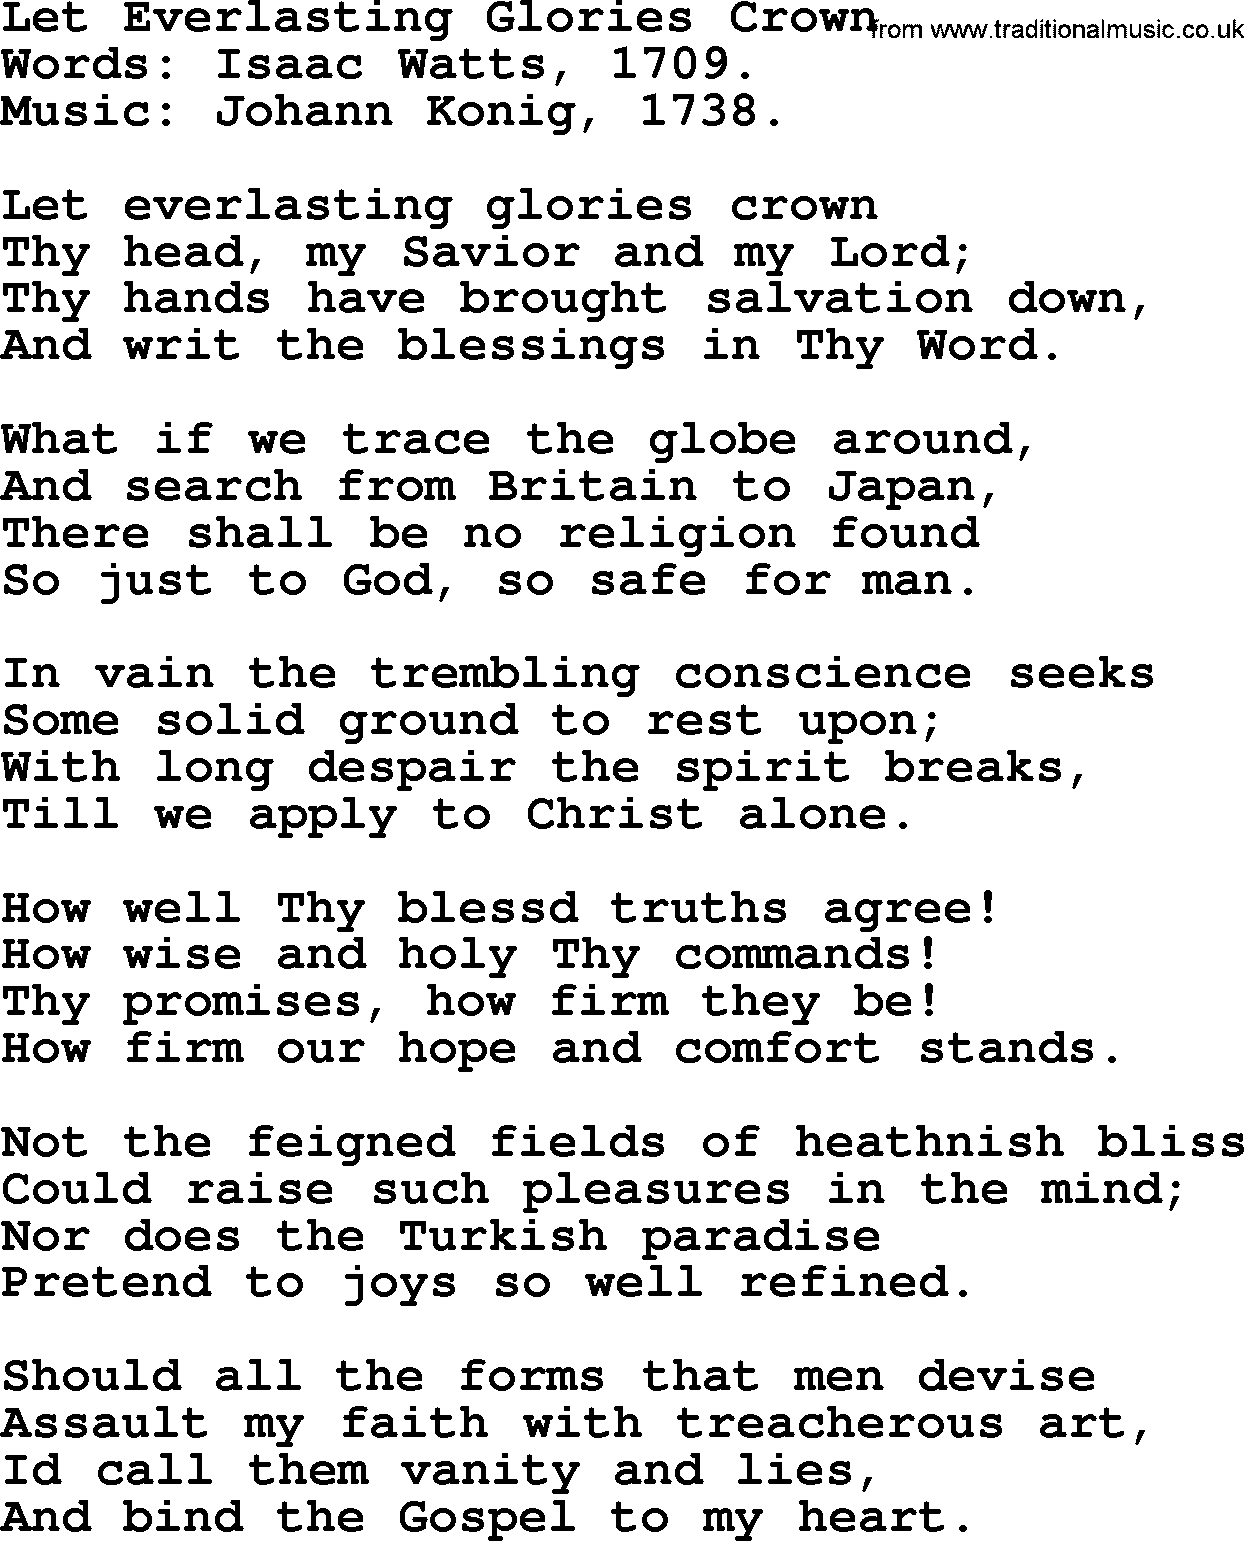 Isaac Watts Christian hymn: Let Everlasting Glories Crown- lyricss